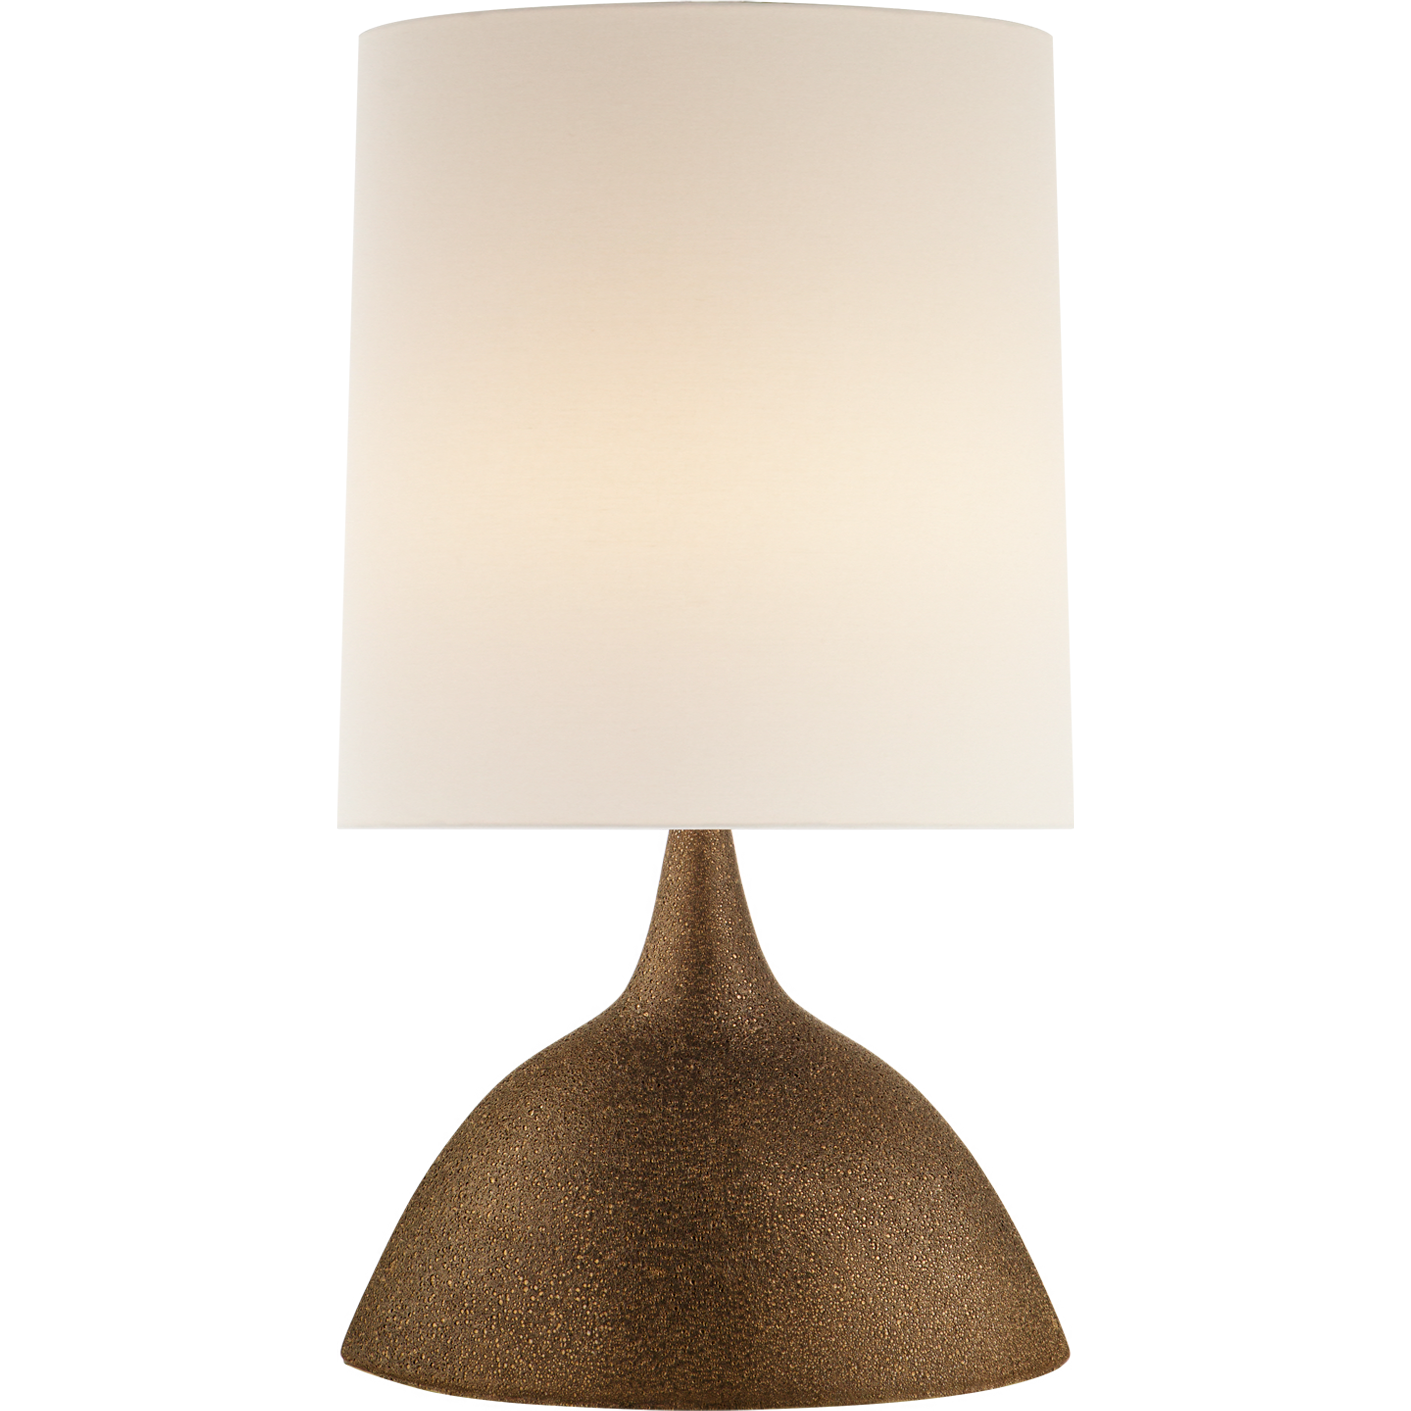 Fanette Large Table Lamp